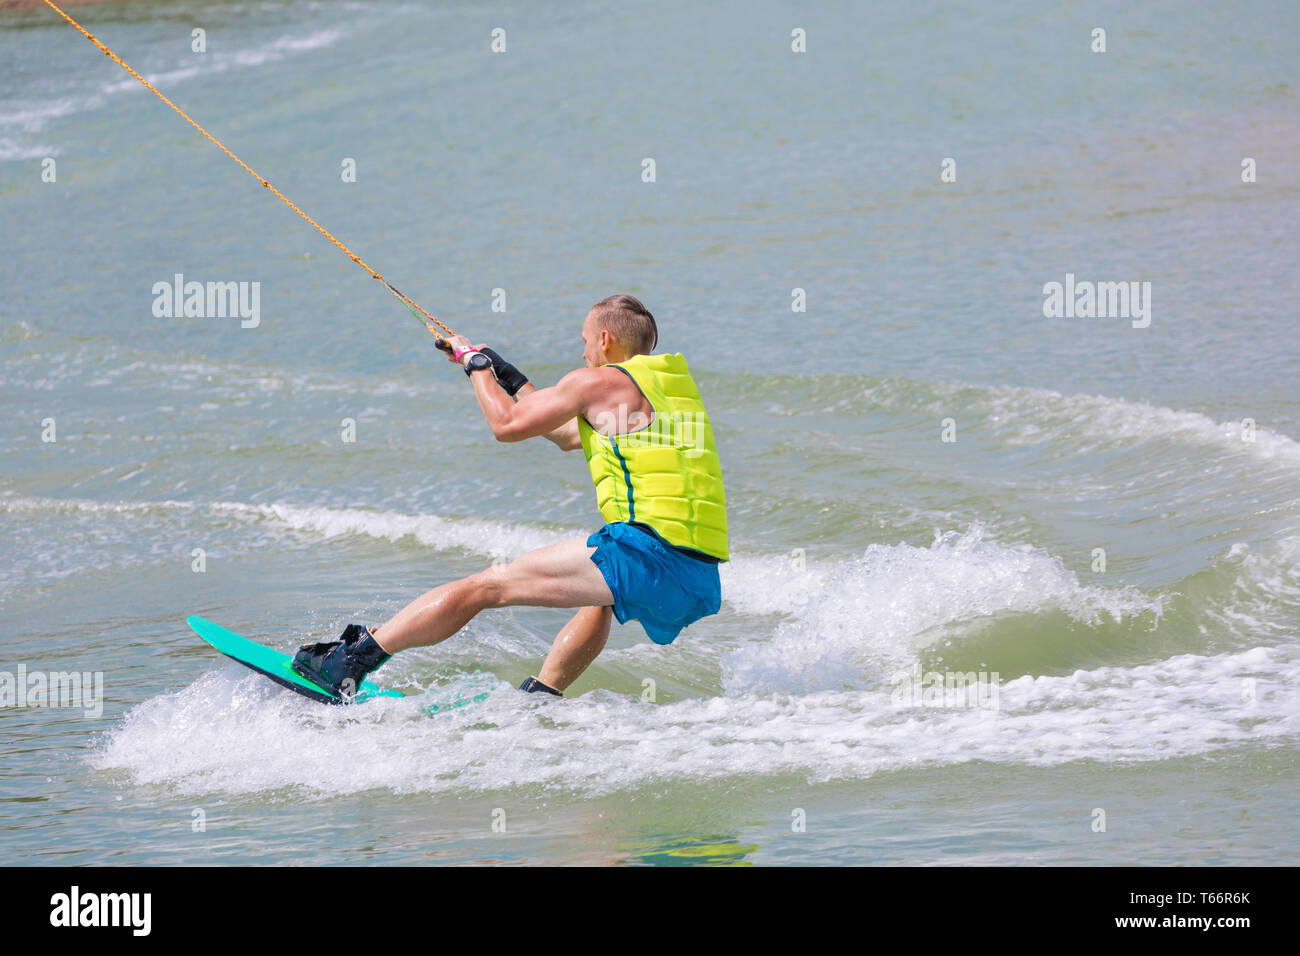 Man study wakeboarding on a blue lake Stock Photo